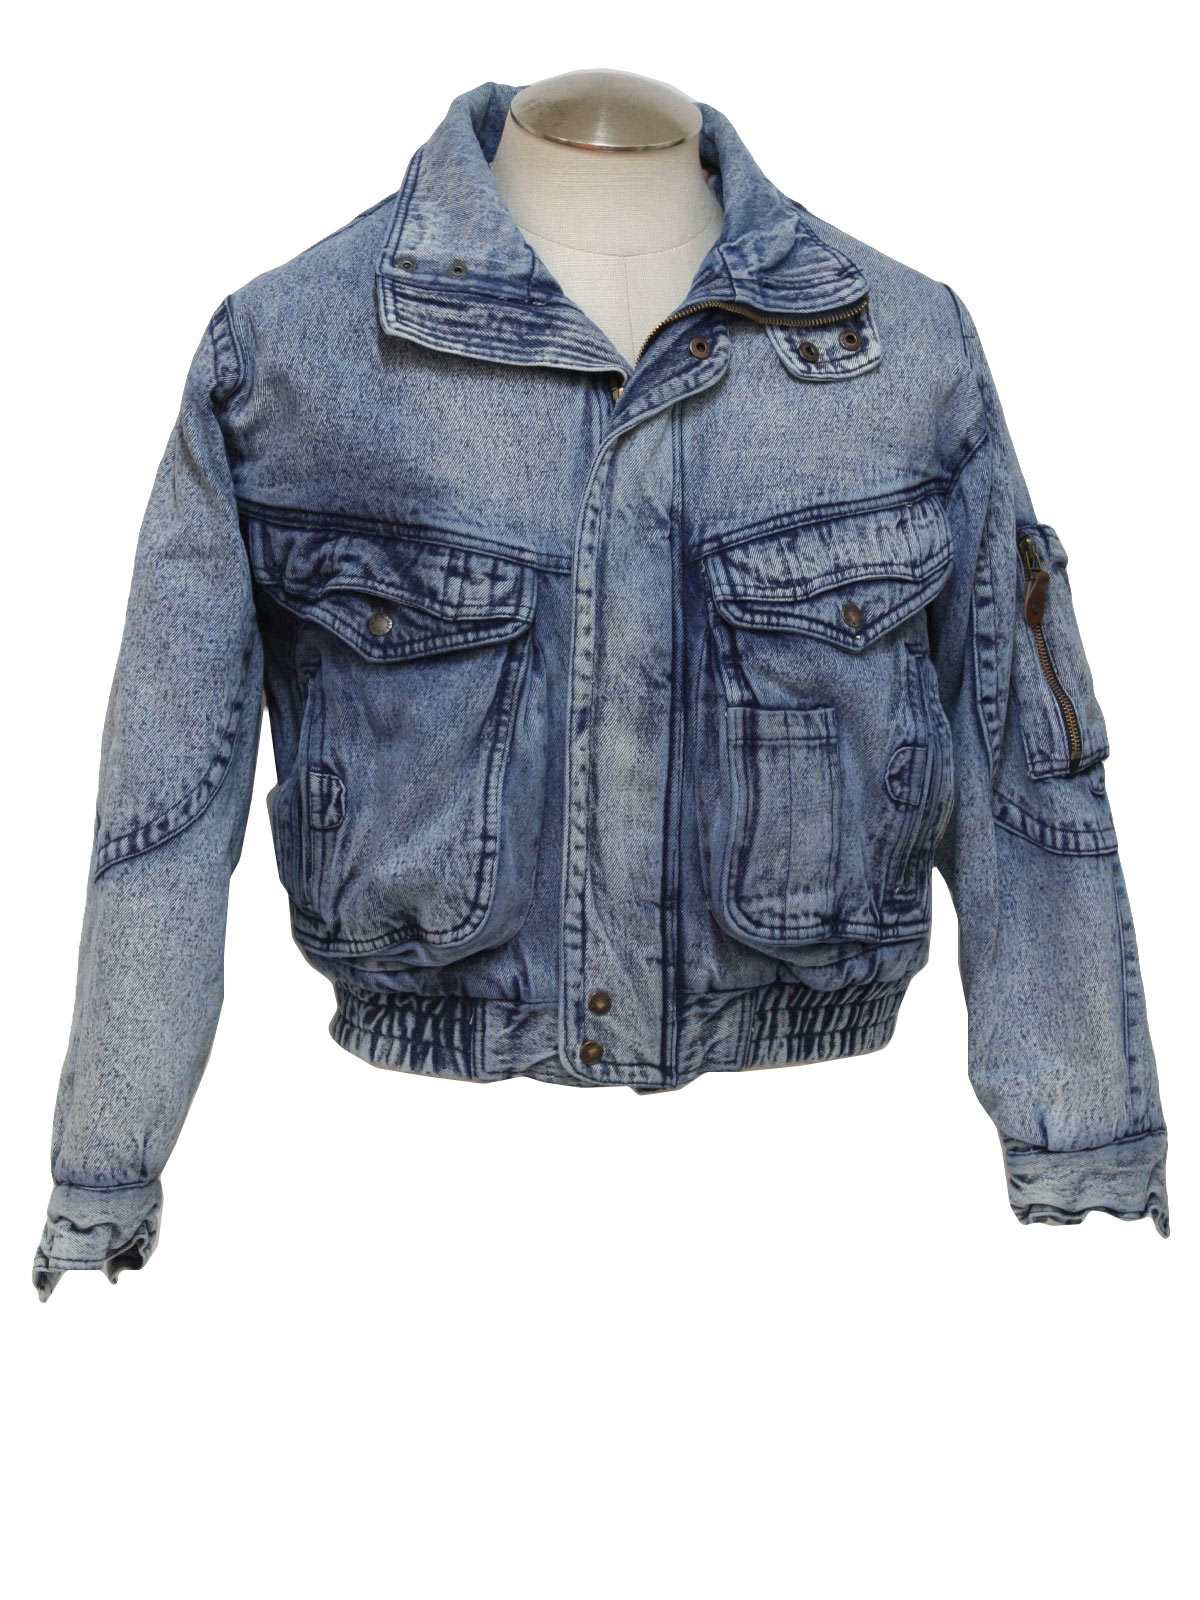 Retro 80's Jacket: 80s -Todays News- Mens acid washed blue cotton